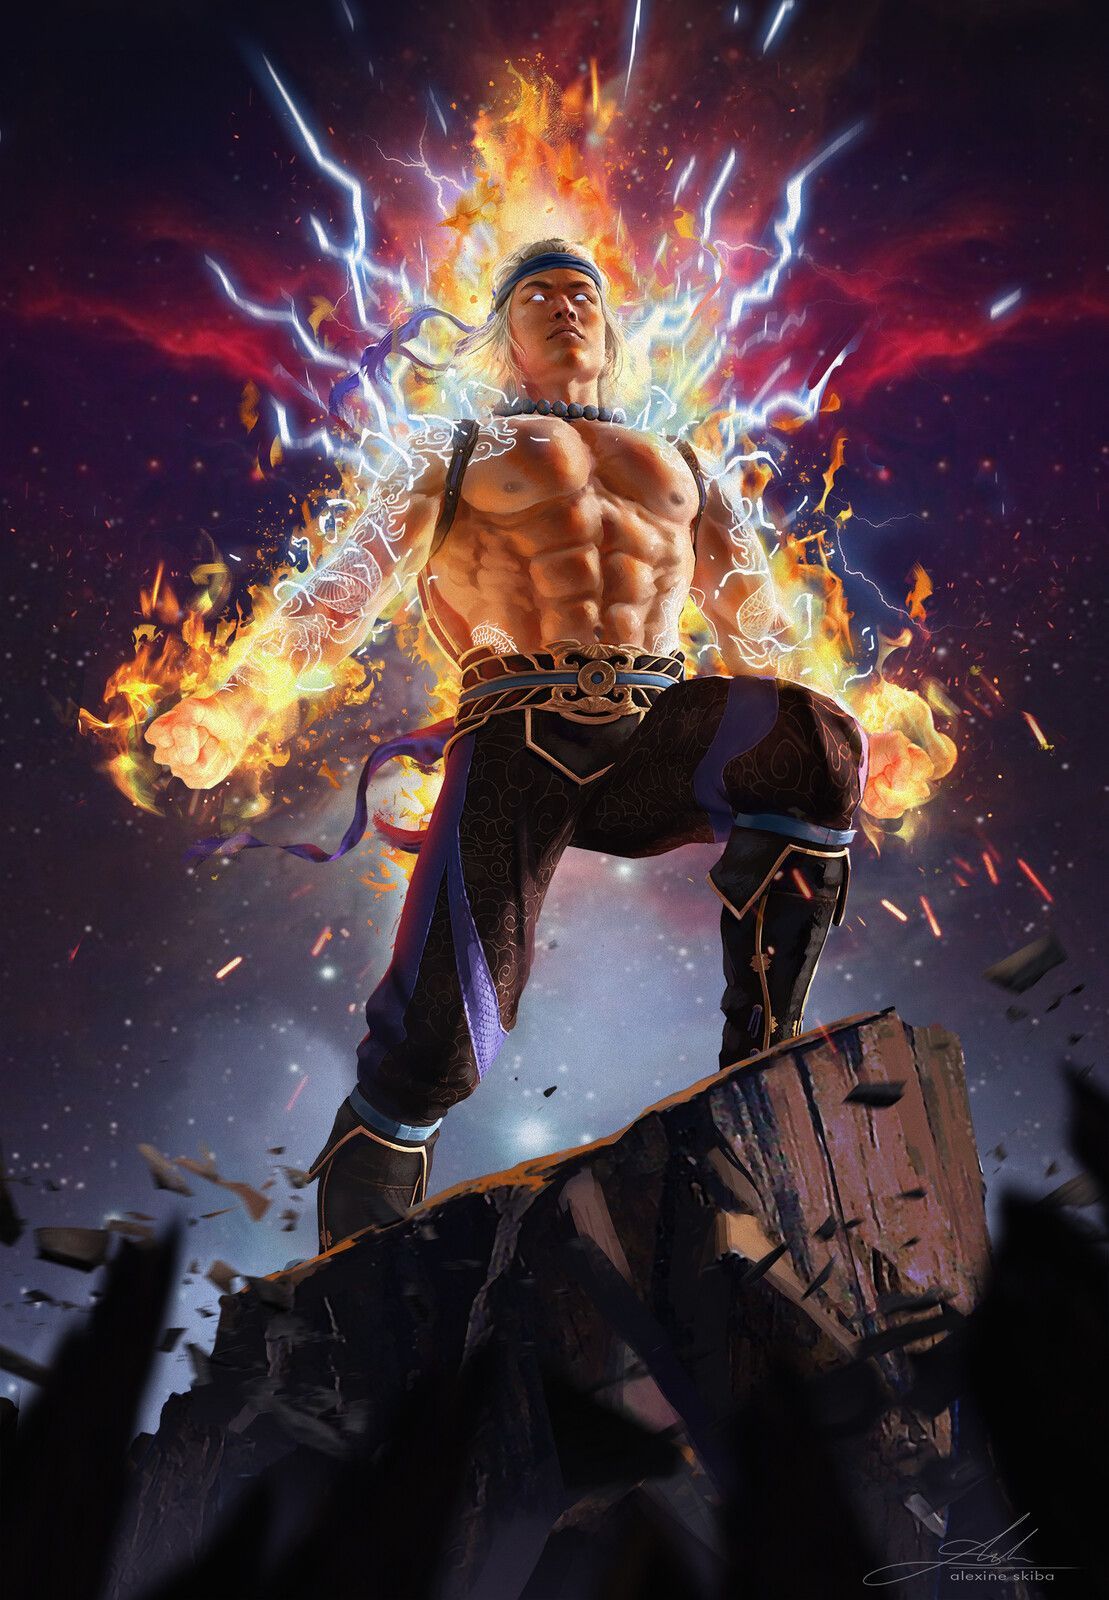 Liu Kang of Thunder and Fire